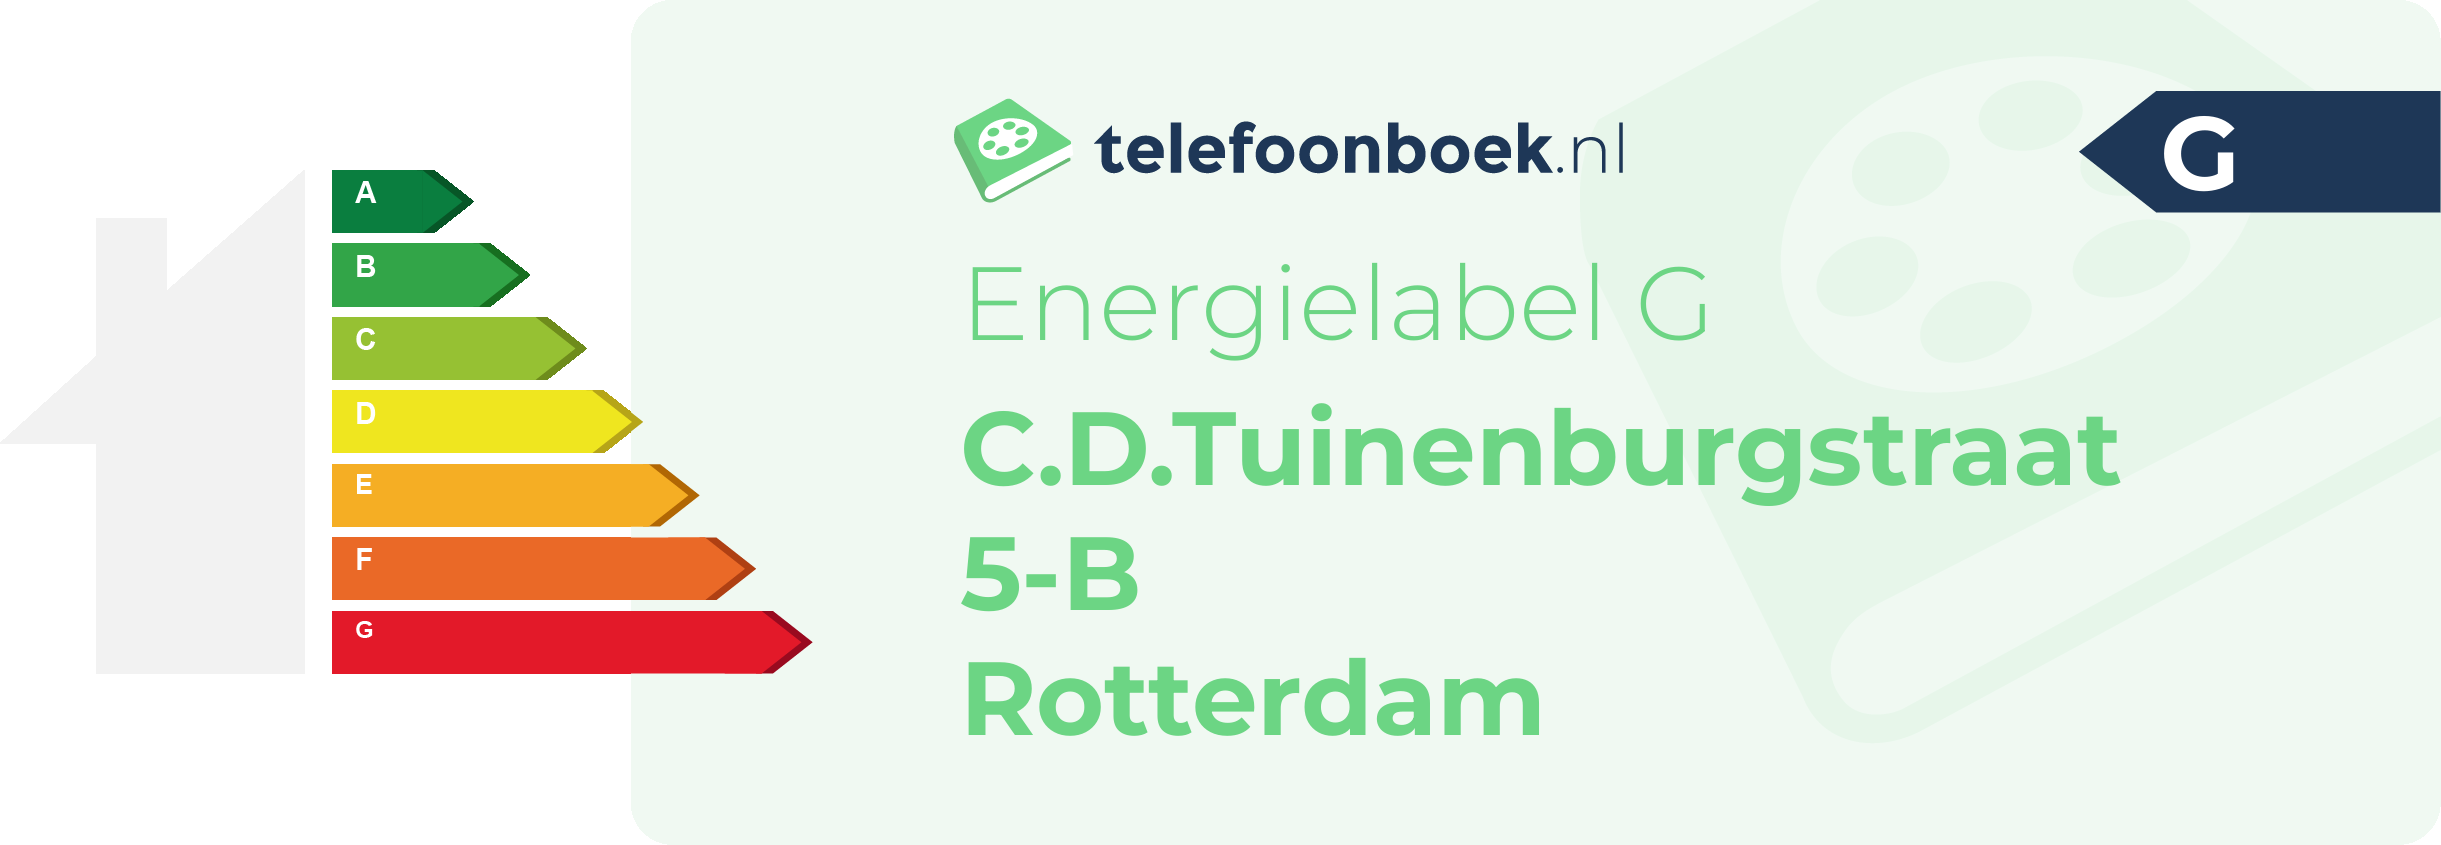 Energielabel C.D.Tuinenburgstraat 5-B Rotterdam